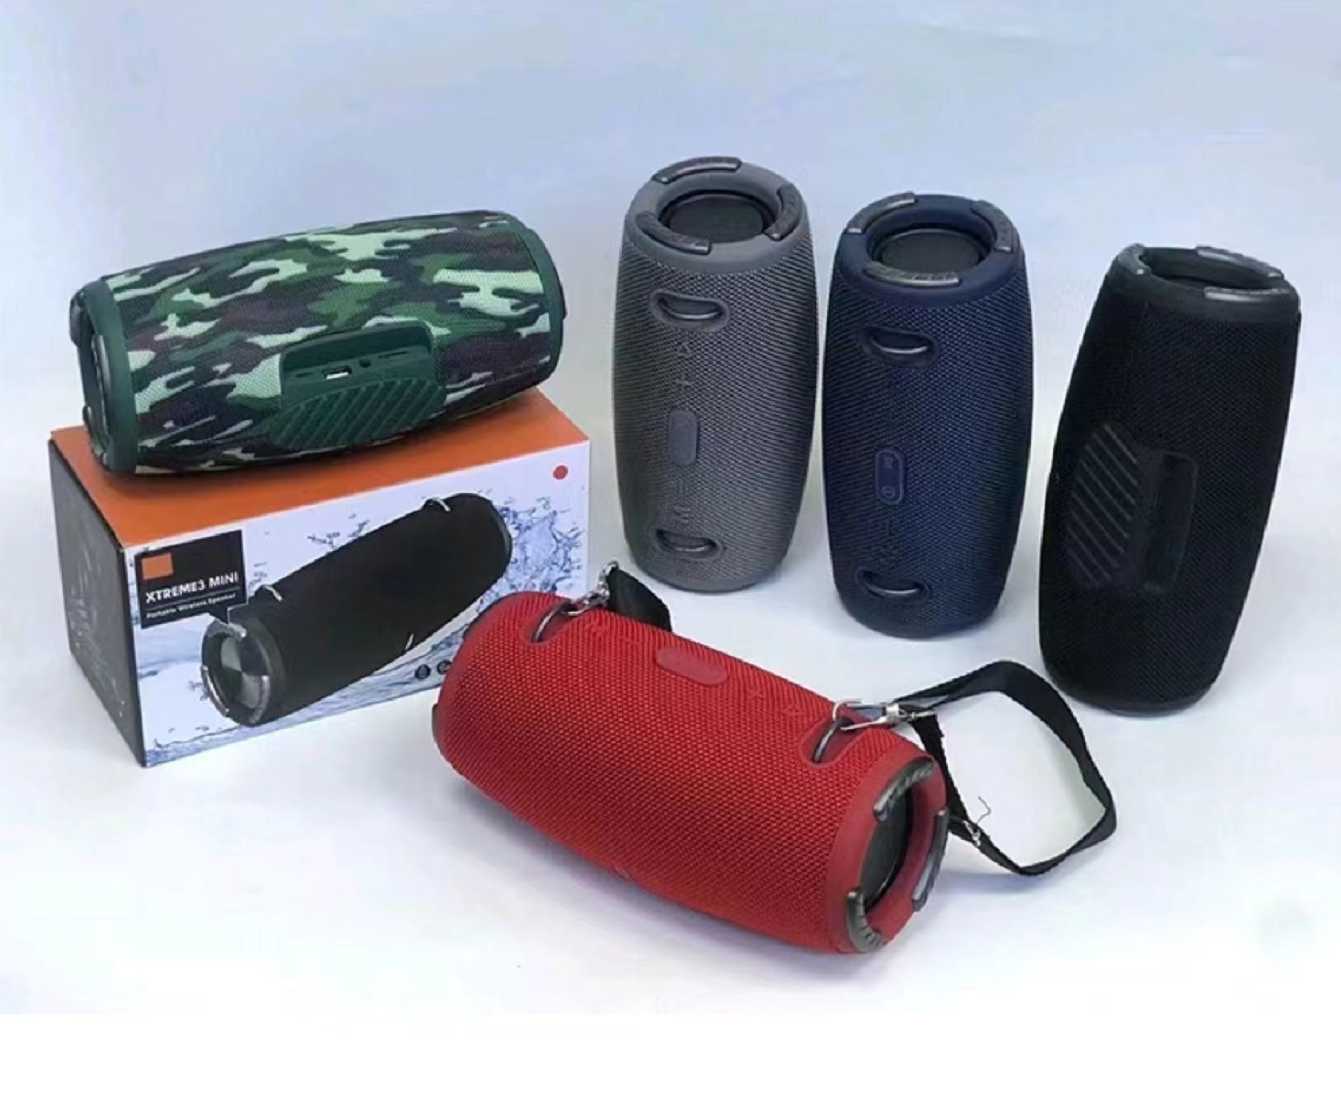 Wireless Bluetooth speaker - Xtreme2 Mini - 883747 - Black